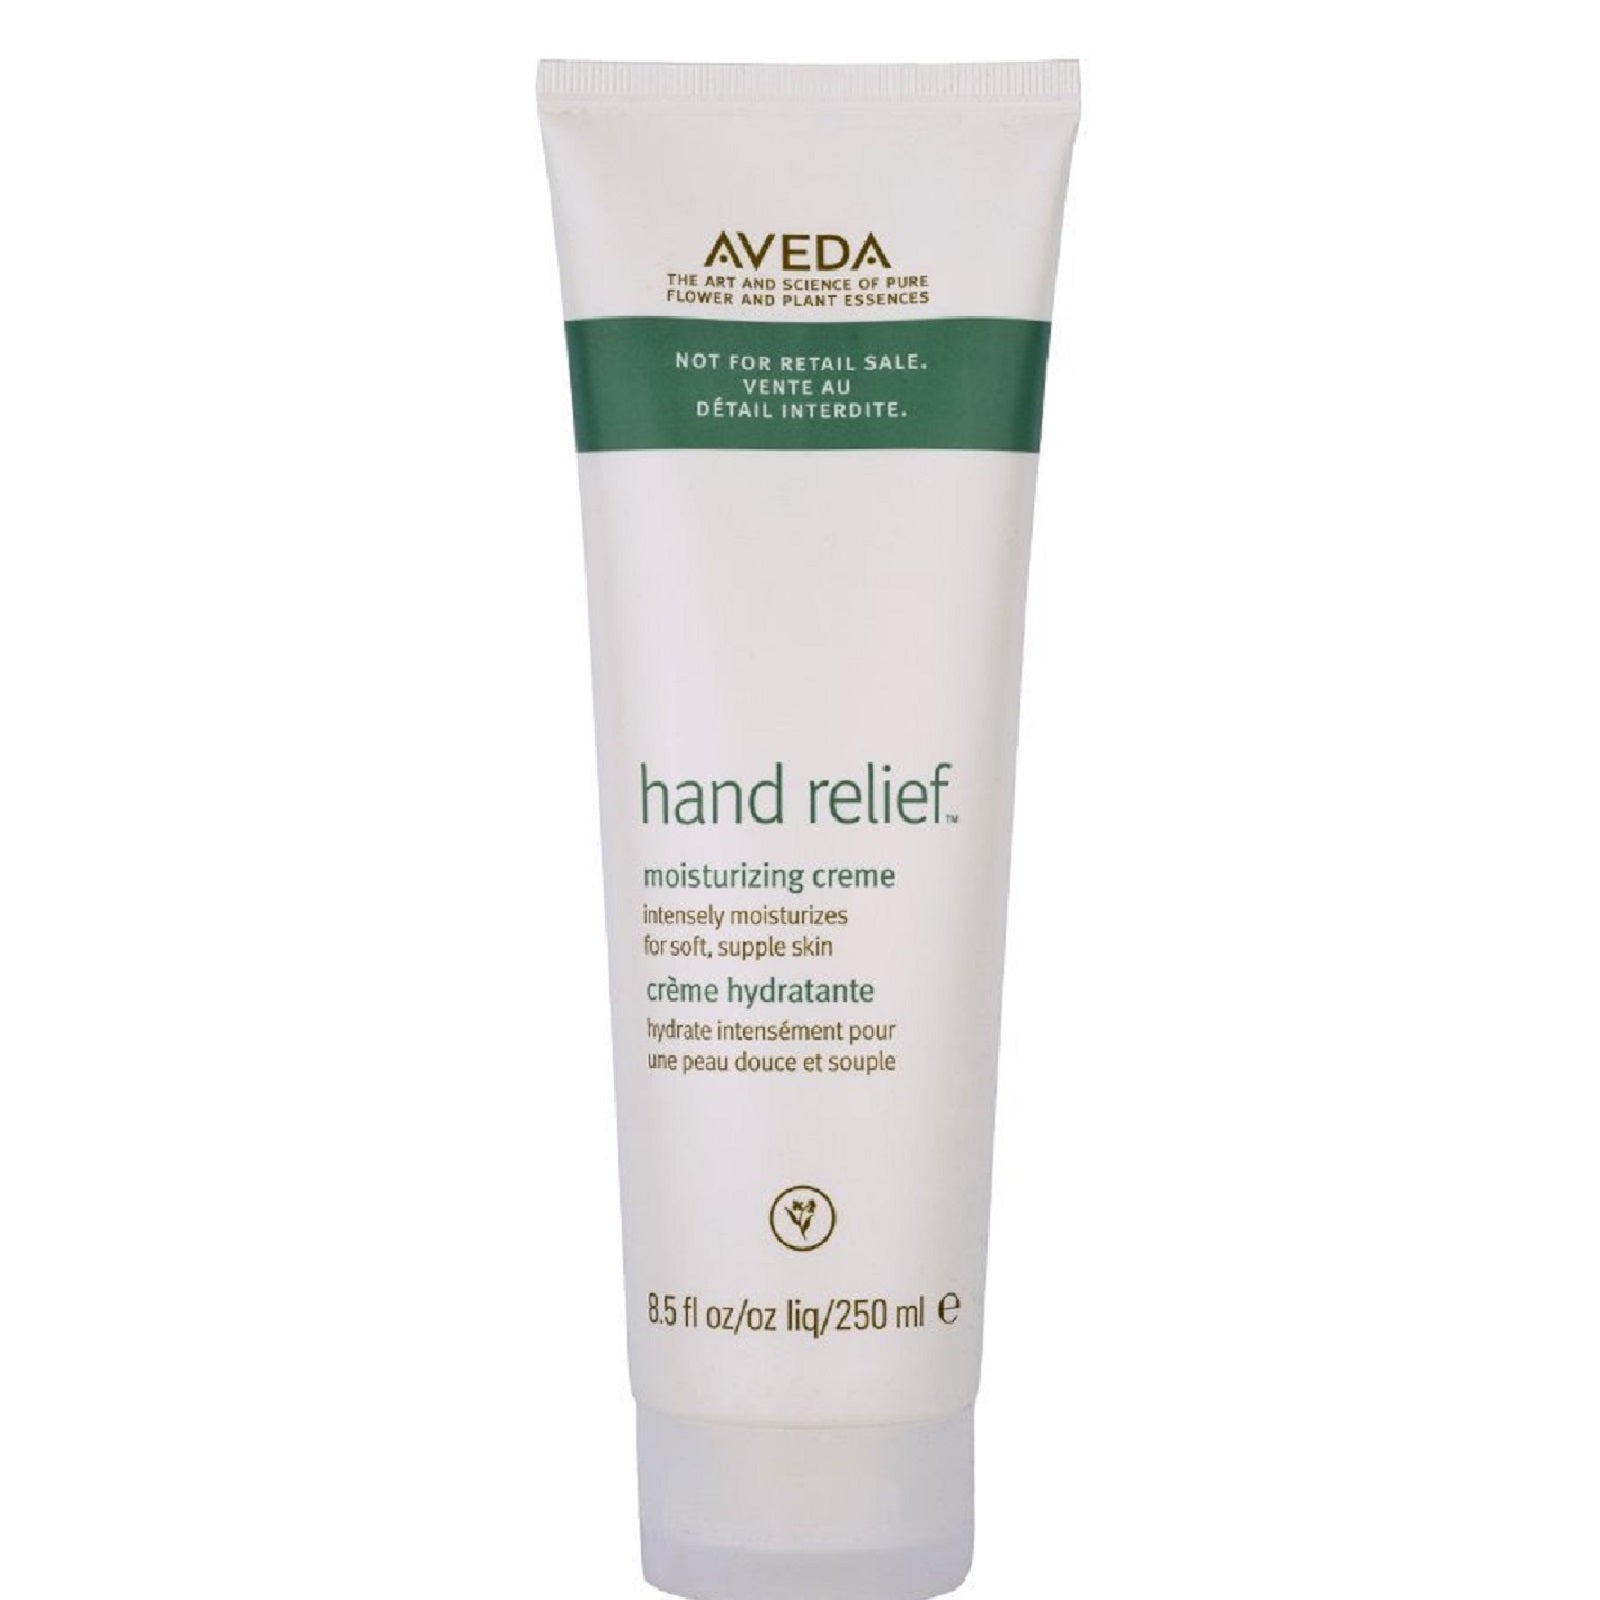 AVEDA Hand Relief Moisturizing Creme 250ml 8.5oz (lotion cream) Pro Size